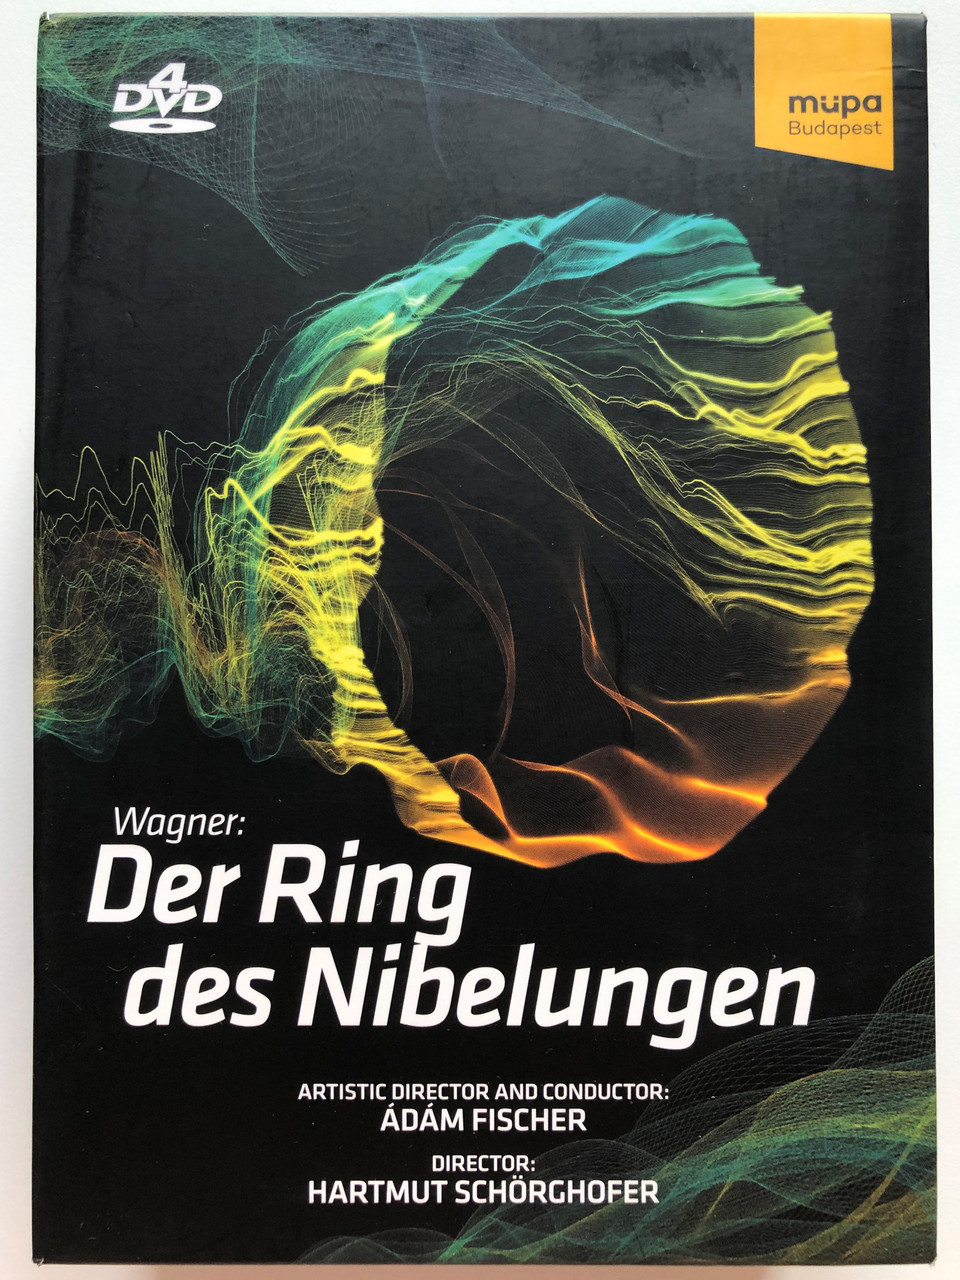 Richard Wagner - Der Ring des Nibelungen 4 DVD Das Rheingold, Die Walküre,  Siegfried and Götterdämmerung / Müpa Budapest / Director: Hartmut  Schörghofer / Artistic Director Conductor: Adam Fischer - bibleinmylanguage